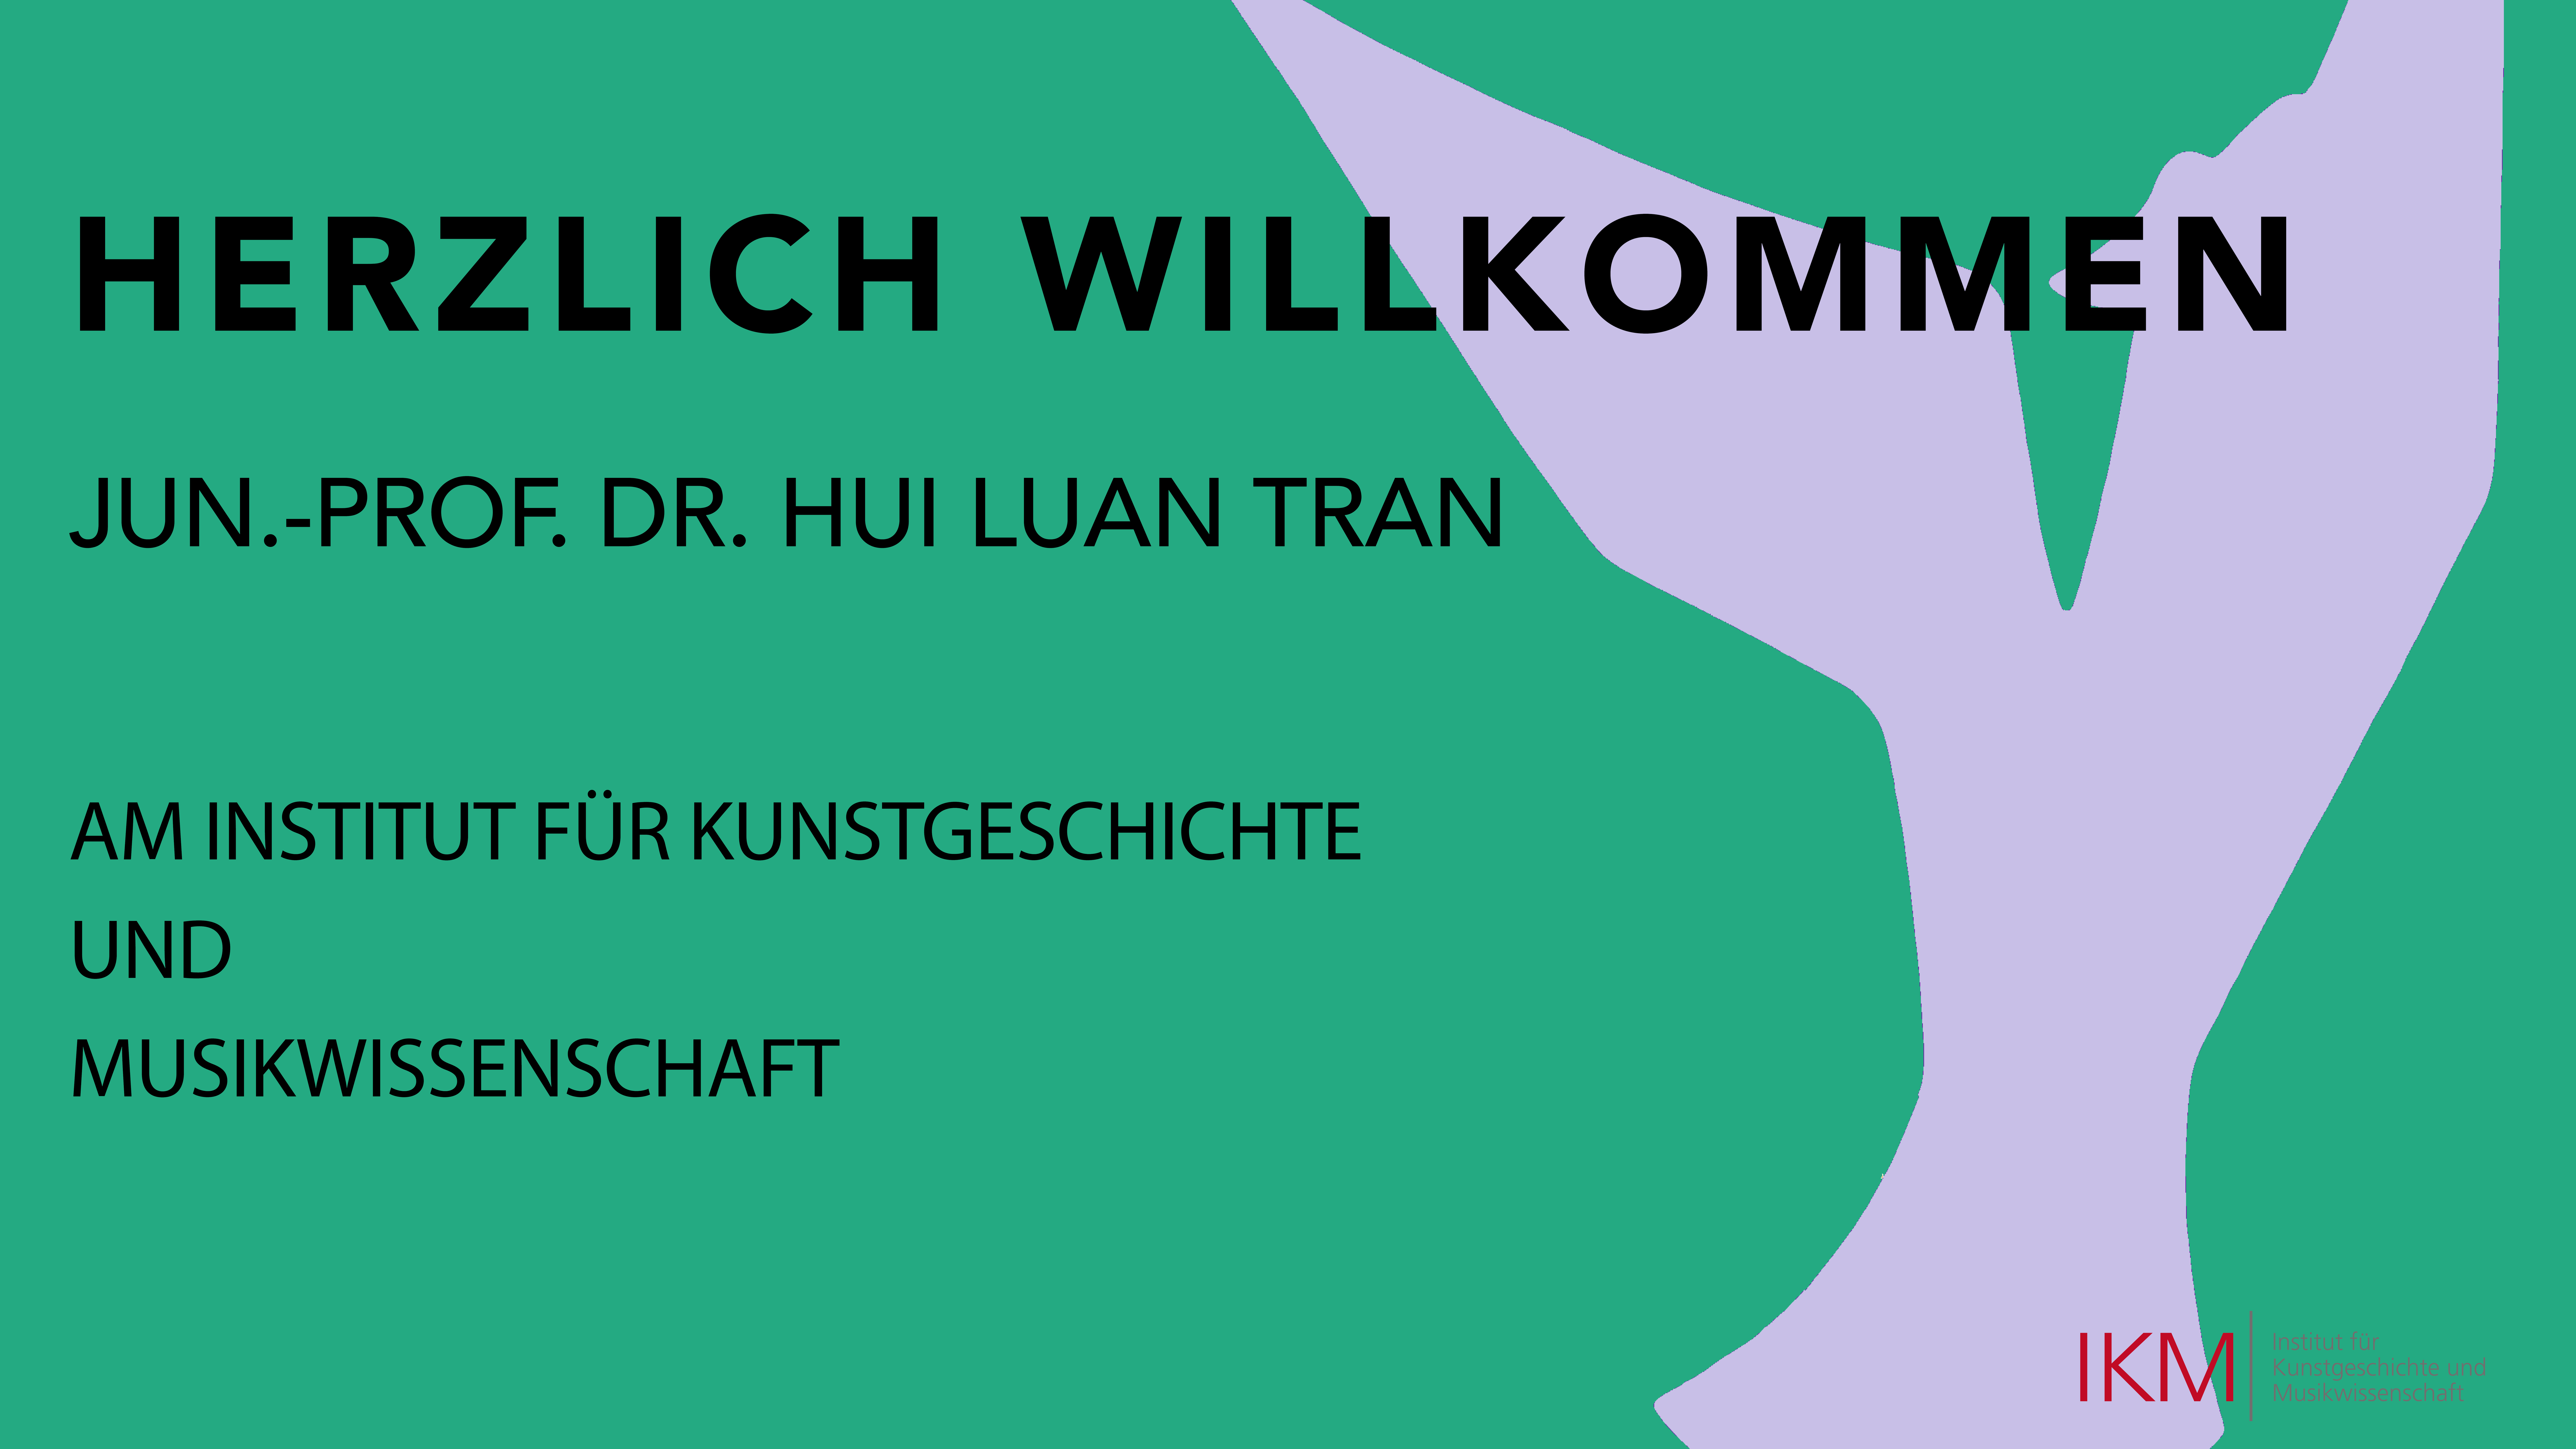 Herzlich willkommen Jun.-Prof. Dr. Hui Luan Tran am IKM!